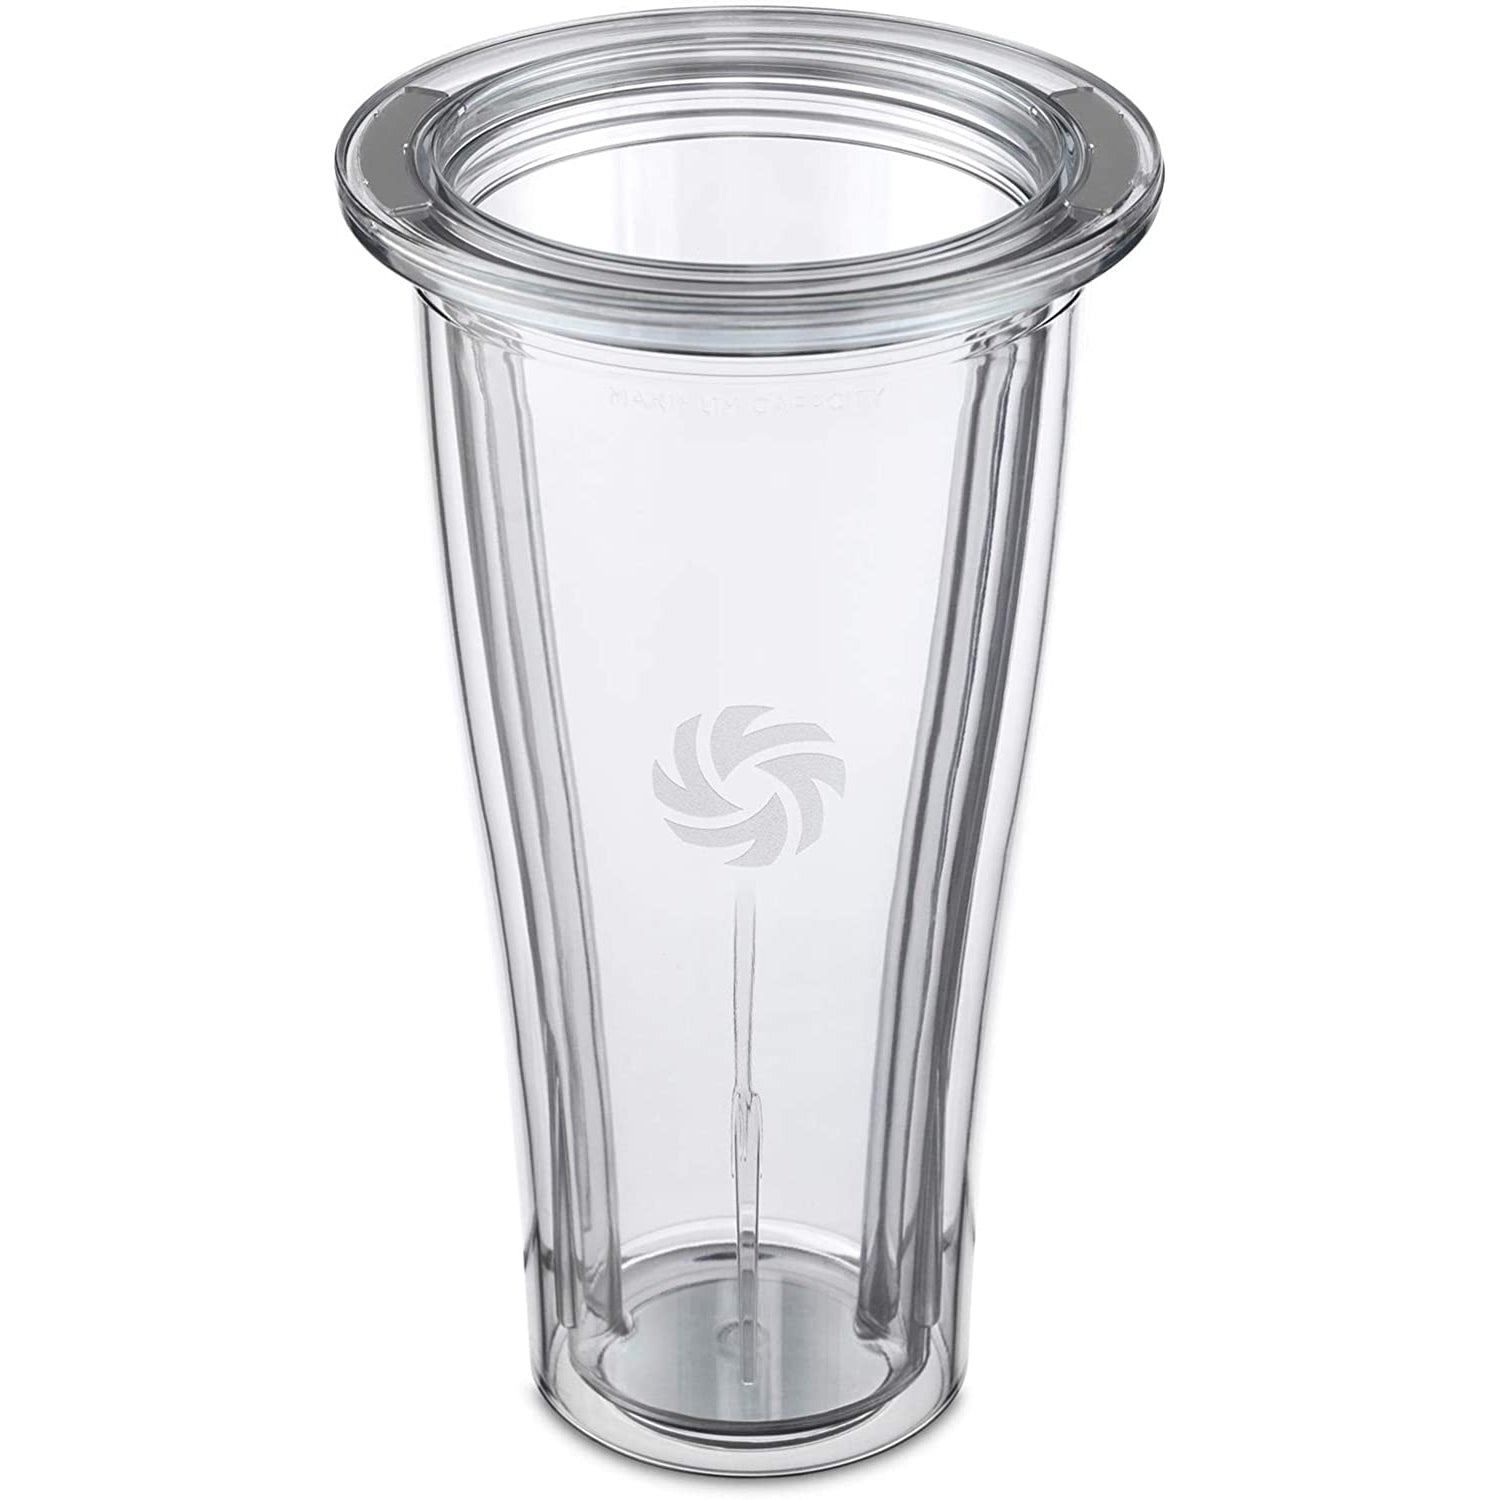 Vitamix Ascent Series Blending Cup Starter Kit, 600ml - Refurbished Pristine